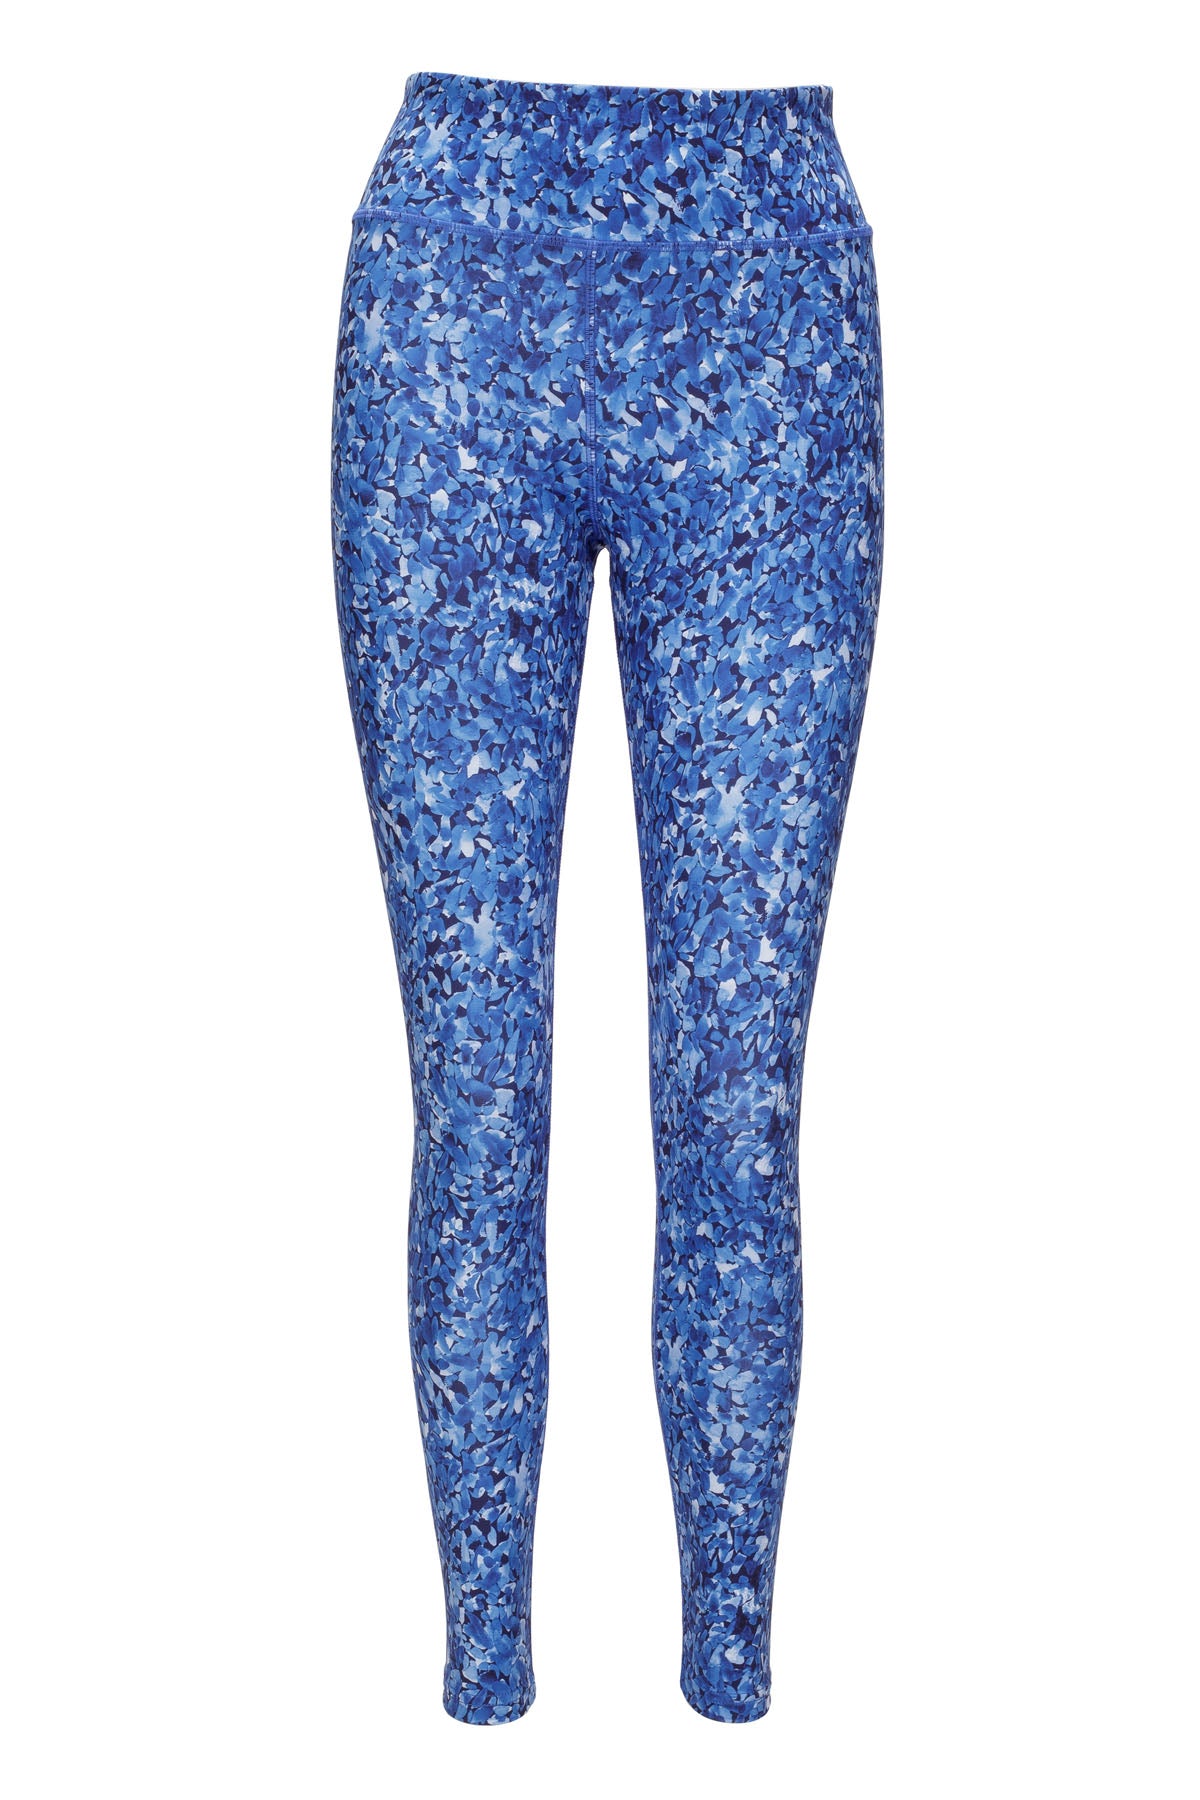 blue printed yoga pants